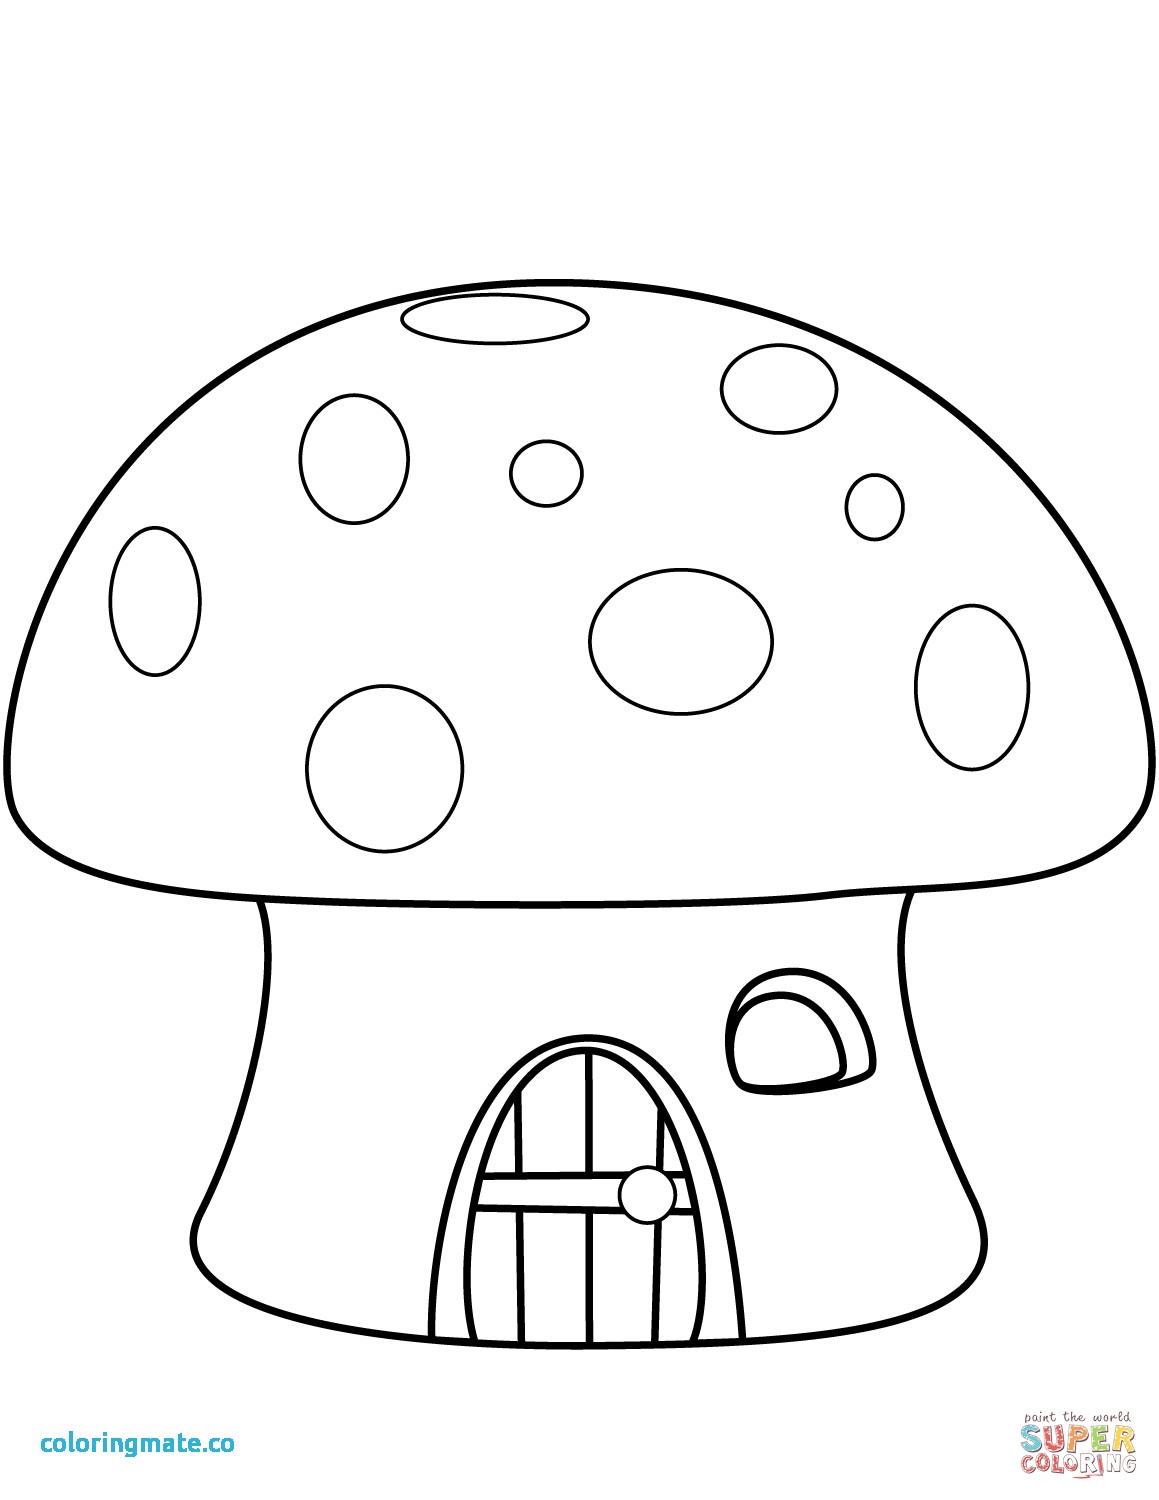 Free Printable Mushroom Coloring Pages at GetColorings.com | Free